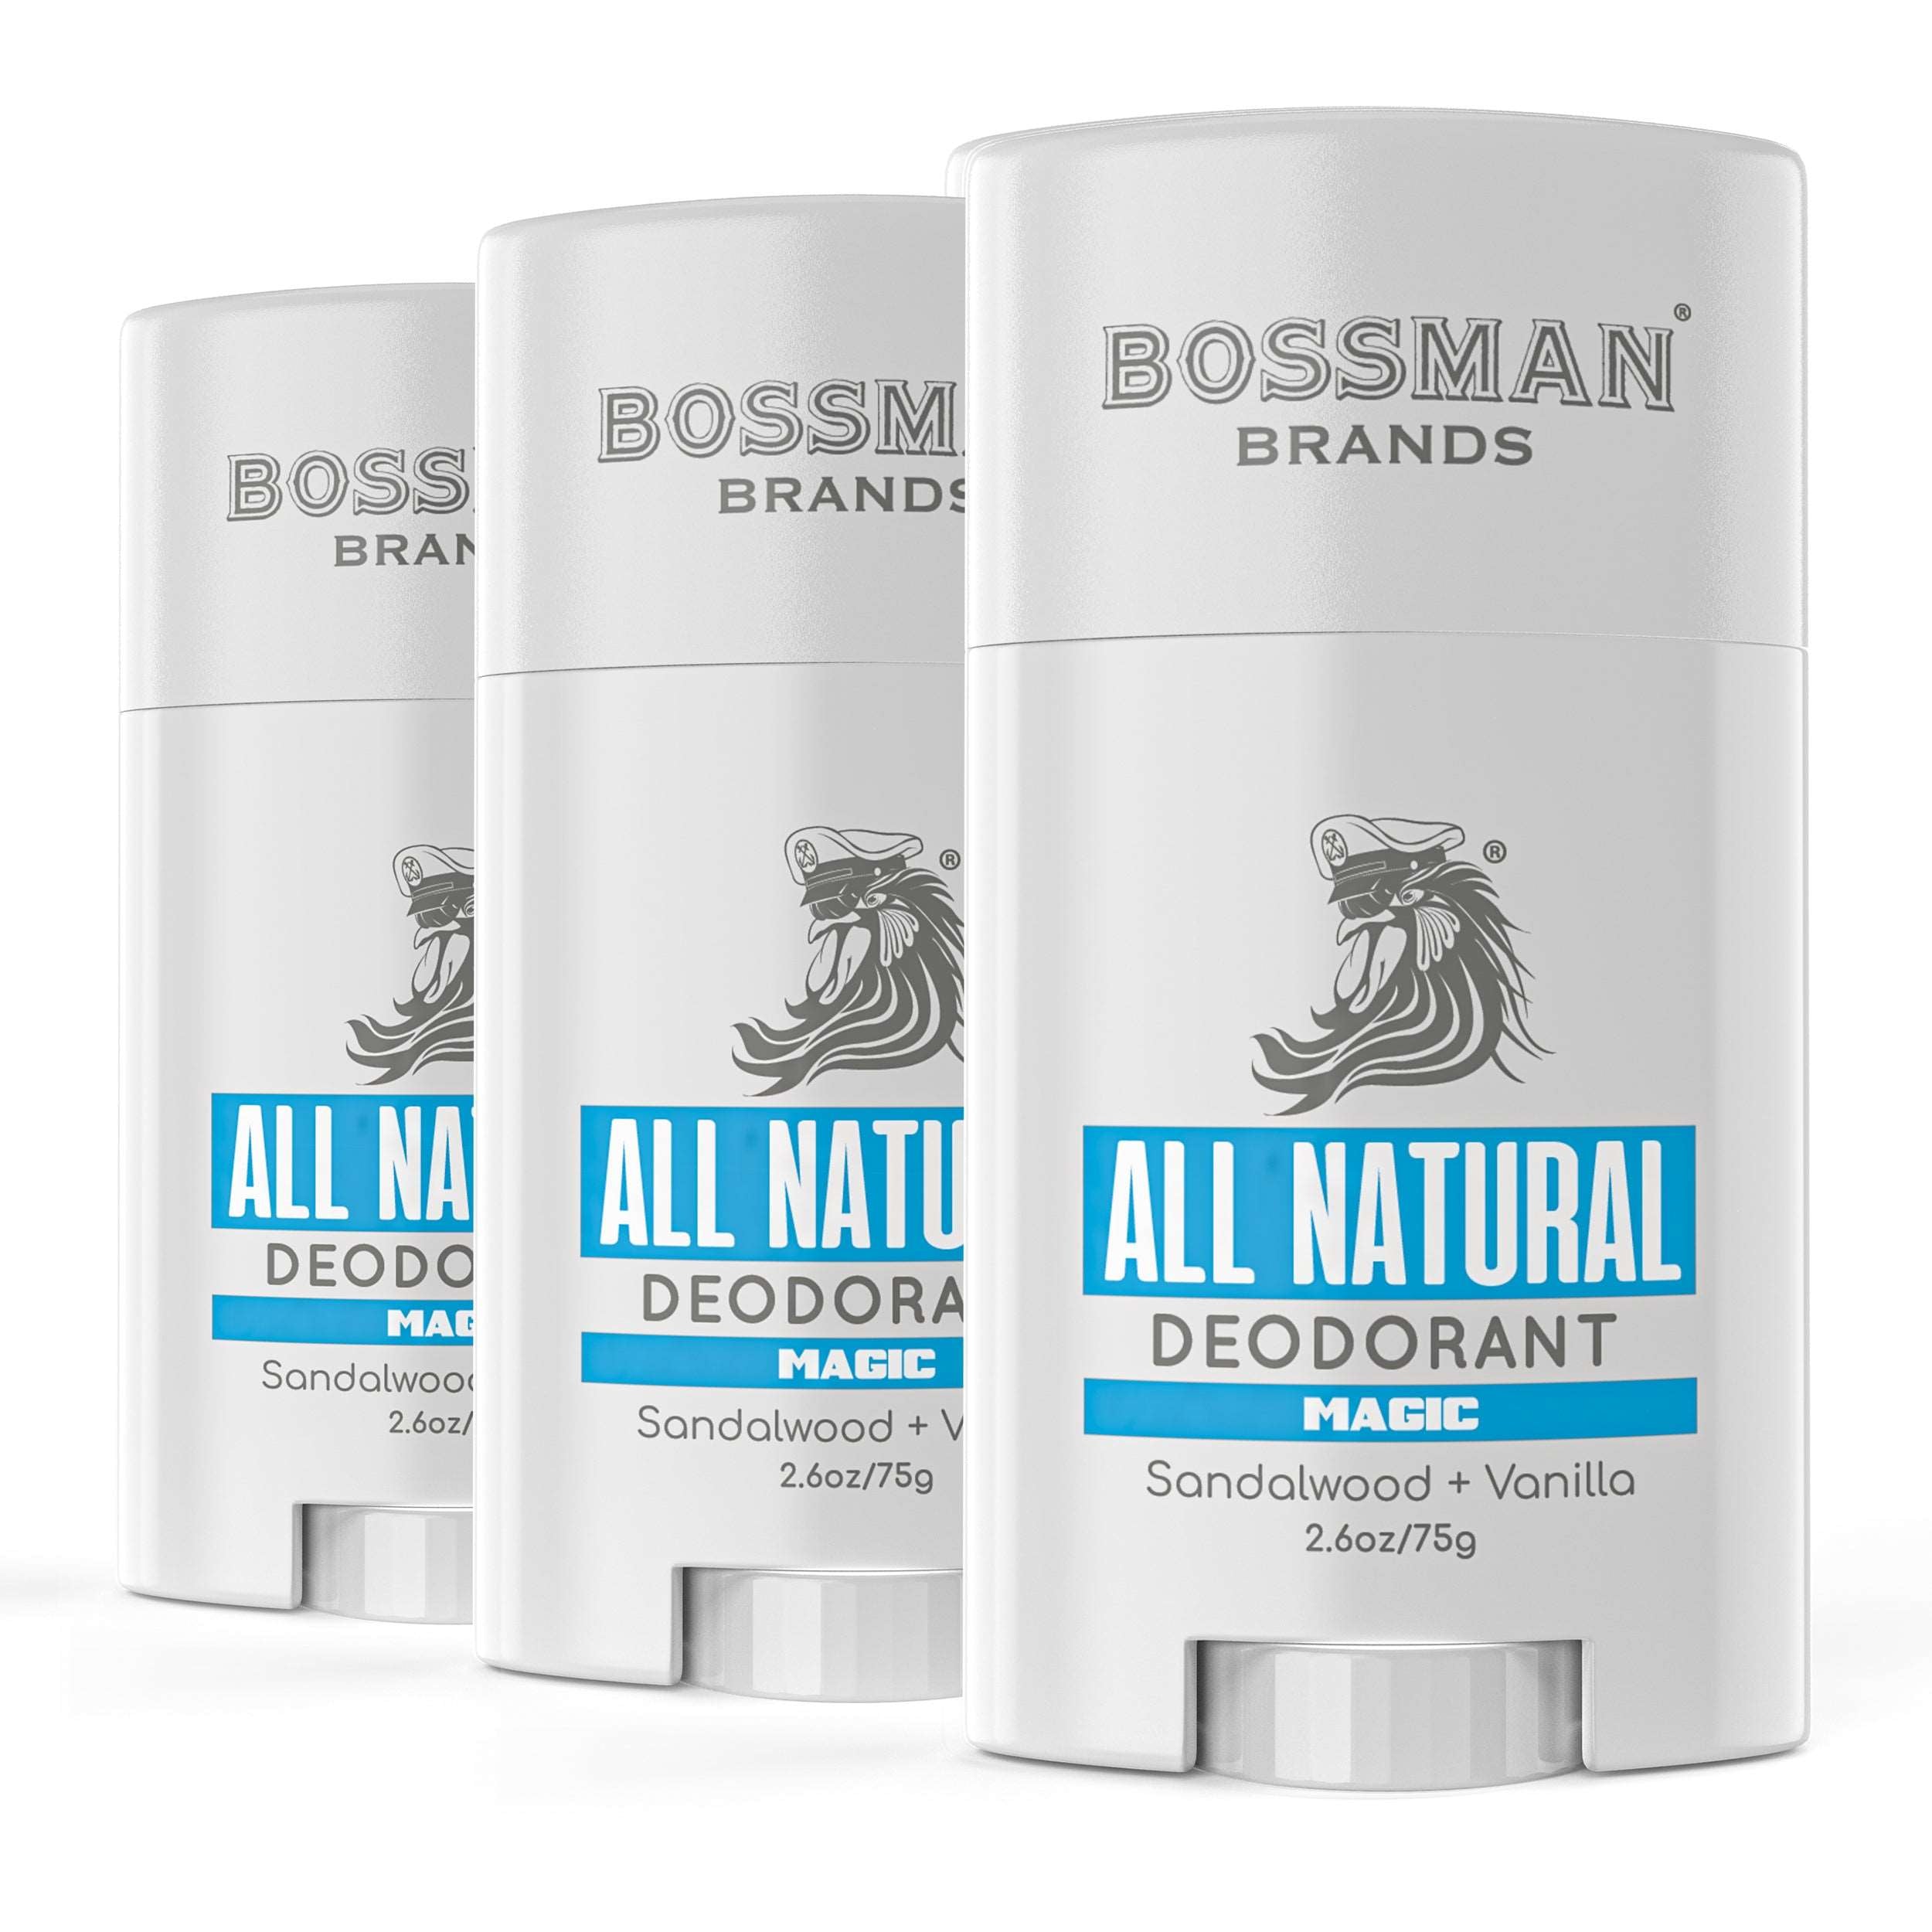 All Natural Deodorant Bossman Brands